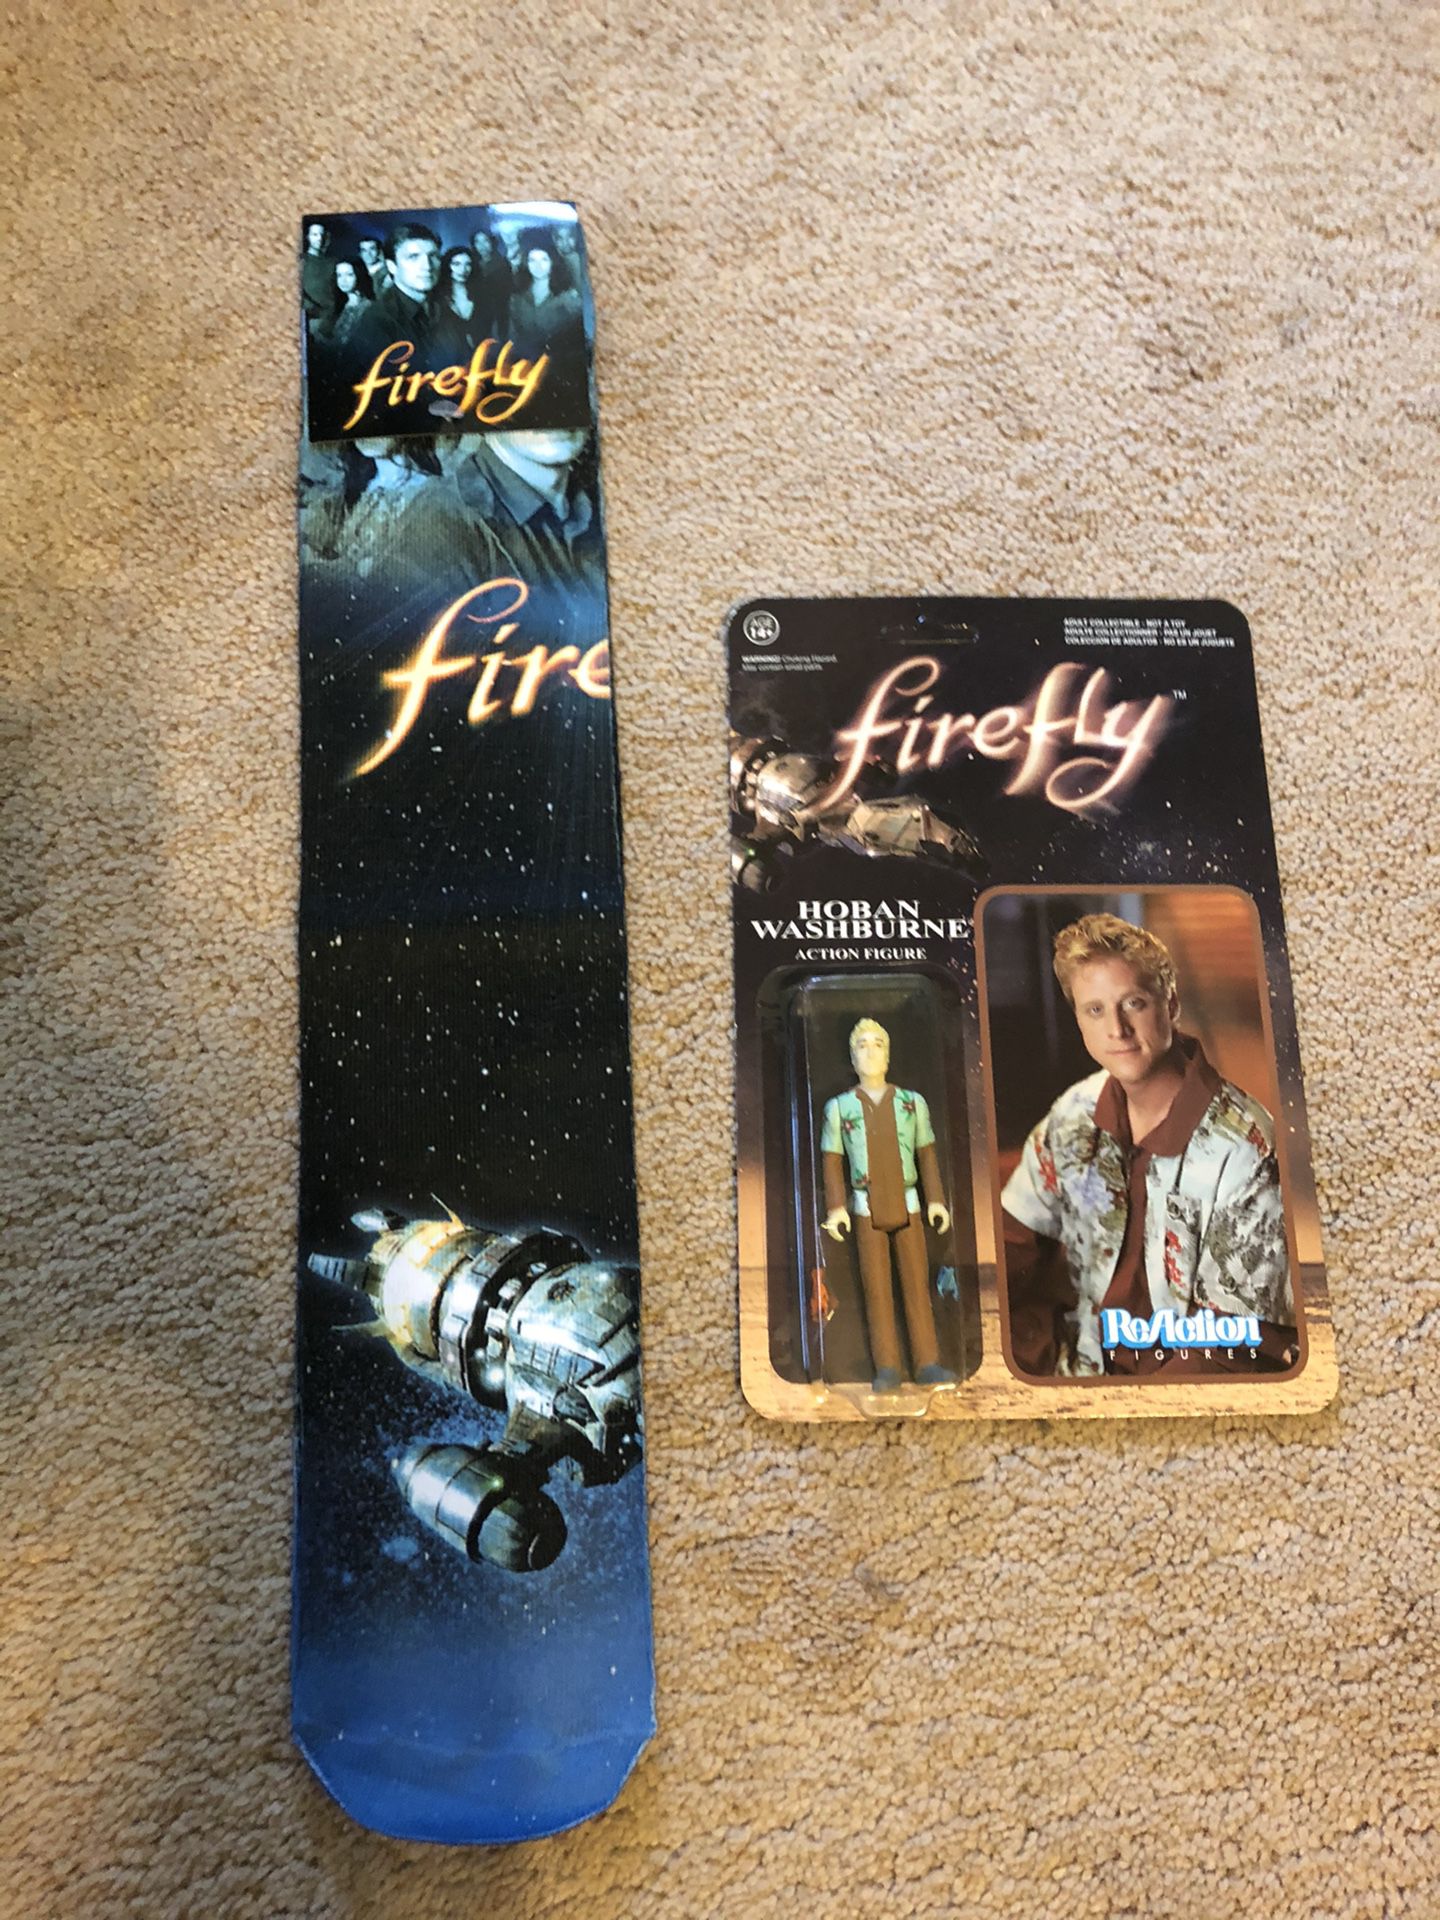 Firefly TV Show Figurine and Socks Set